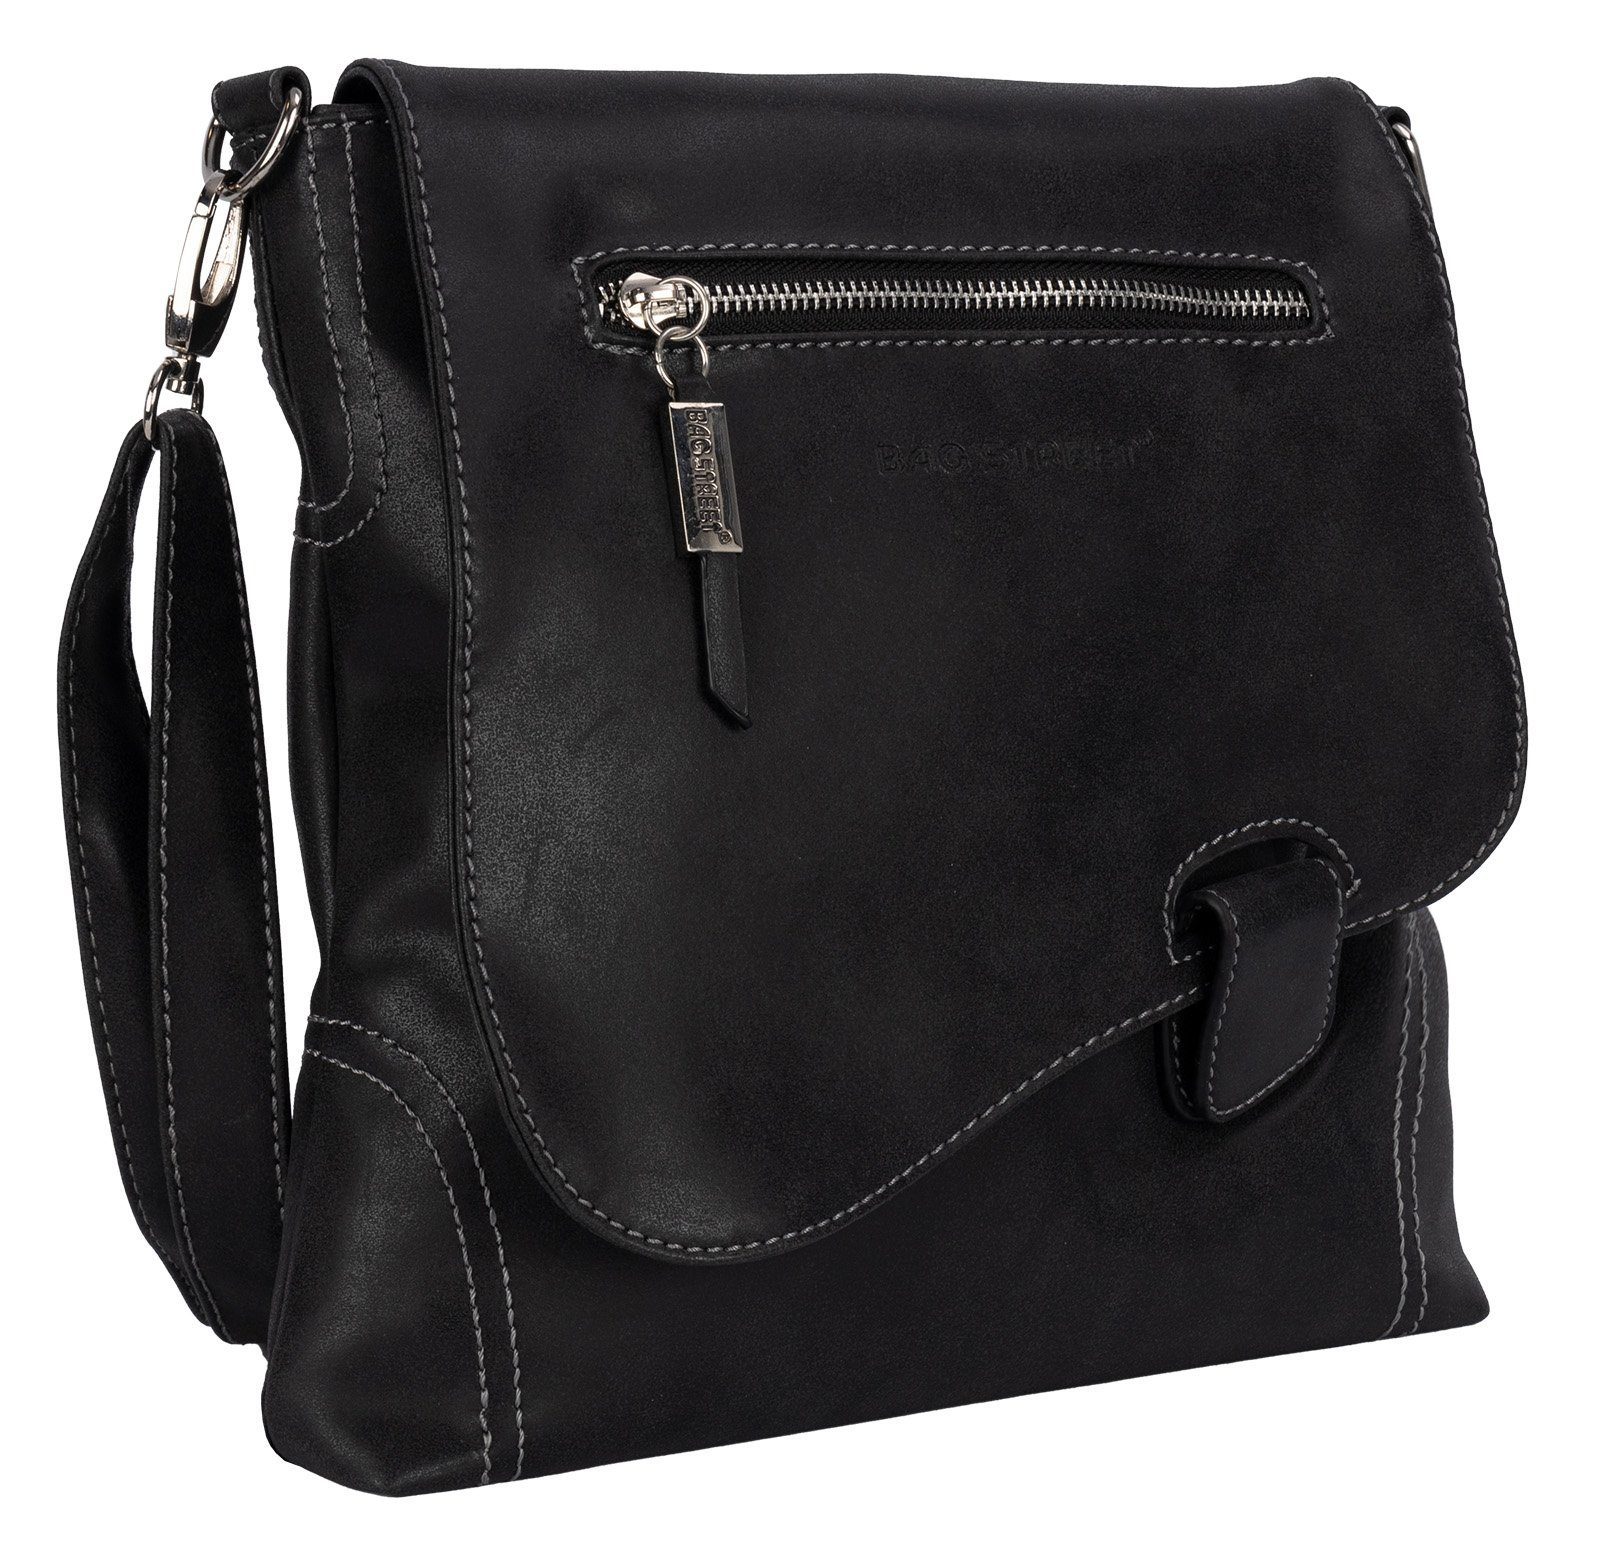 BAG STREET Schlüsseltasche Bag Street Damentasche Umhängetasche Handtasche Schultertasche T0104, als Schultertasche, Umhängetasche tragbar SCHWARZ